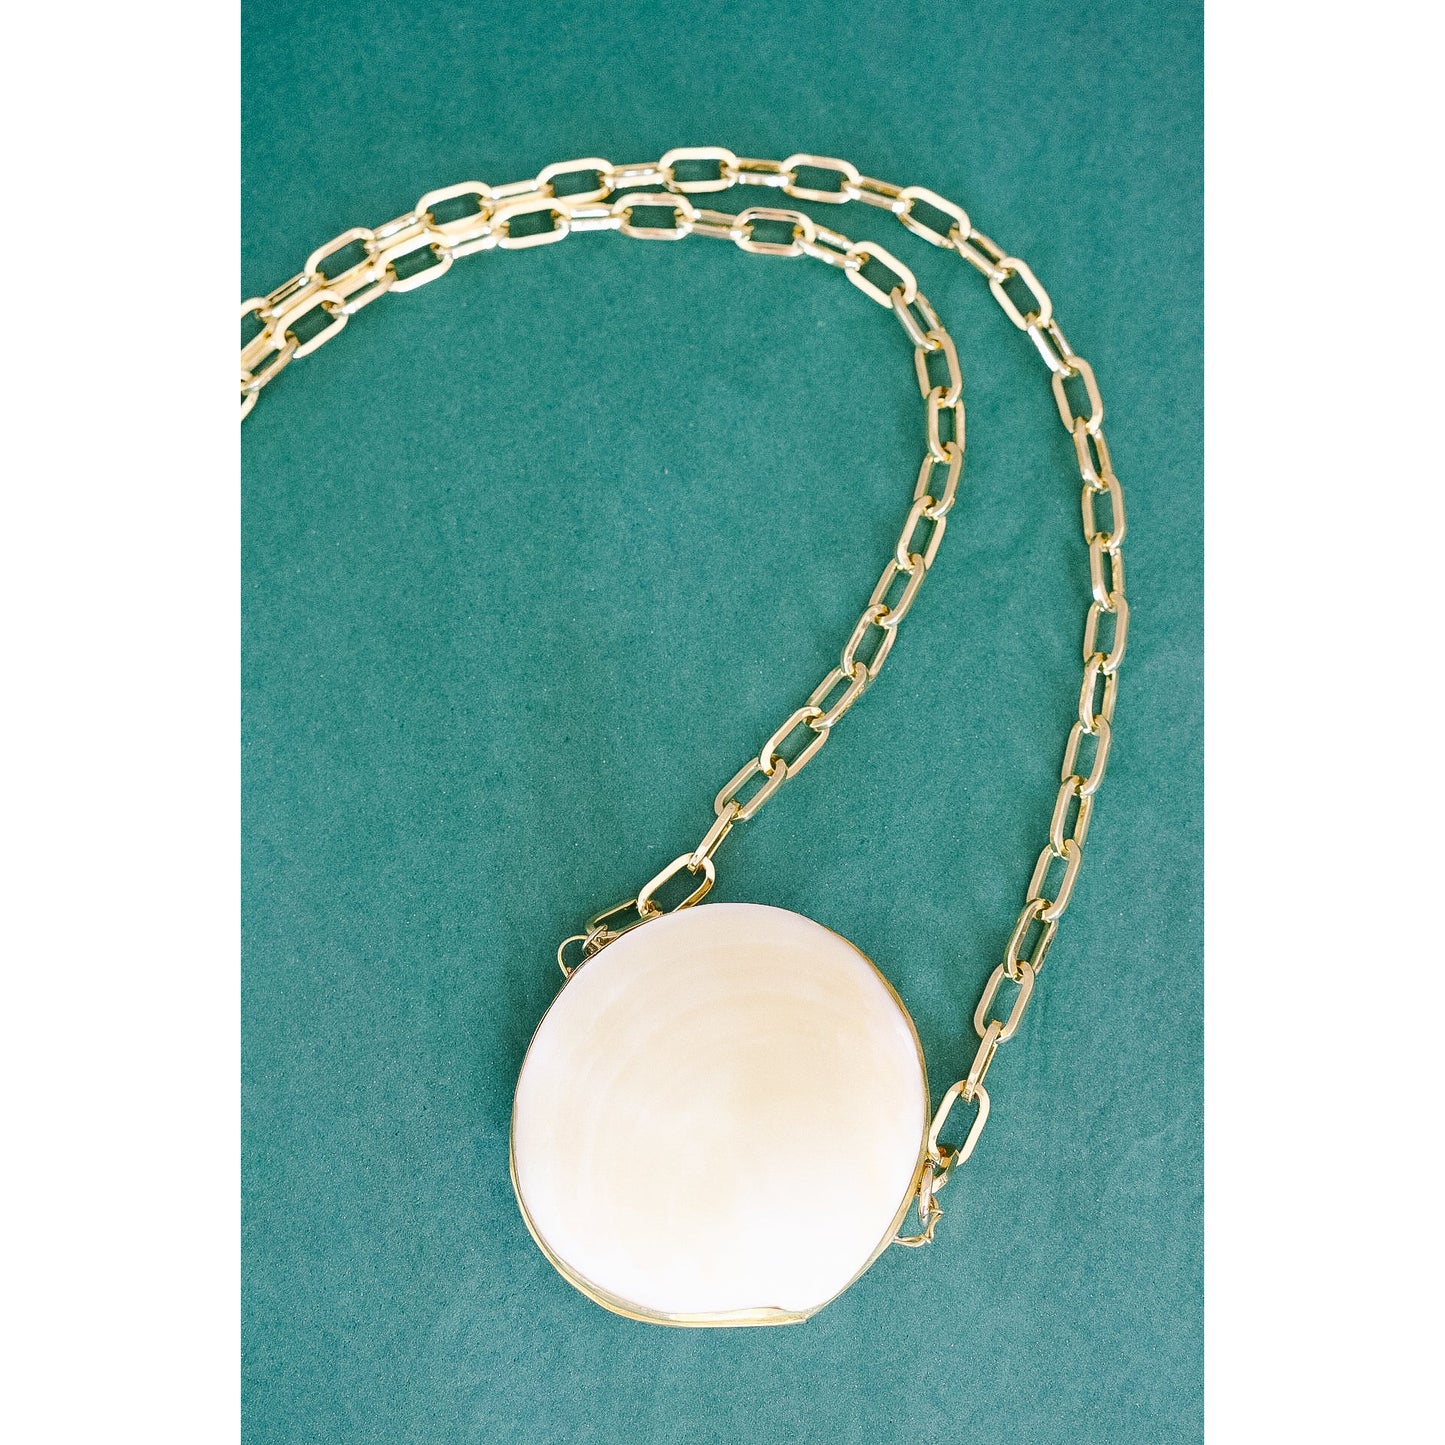 Pecten Shell Trinket Purse Necklace - Large